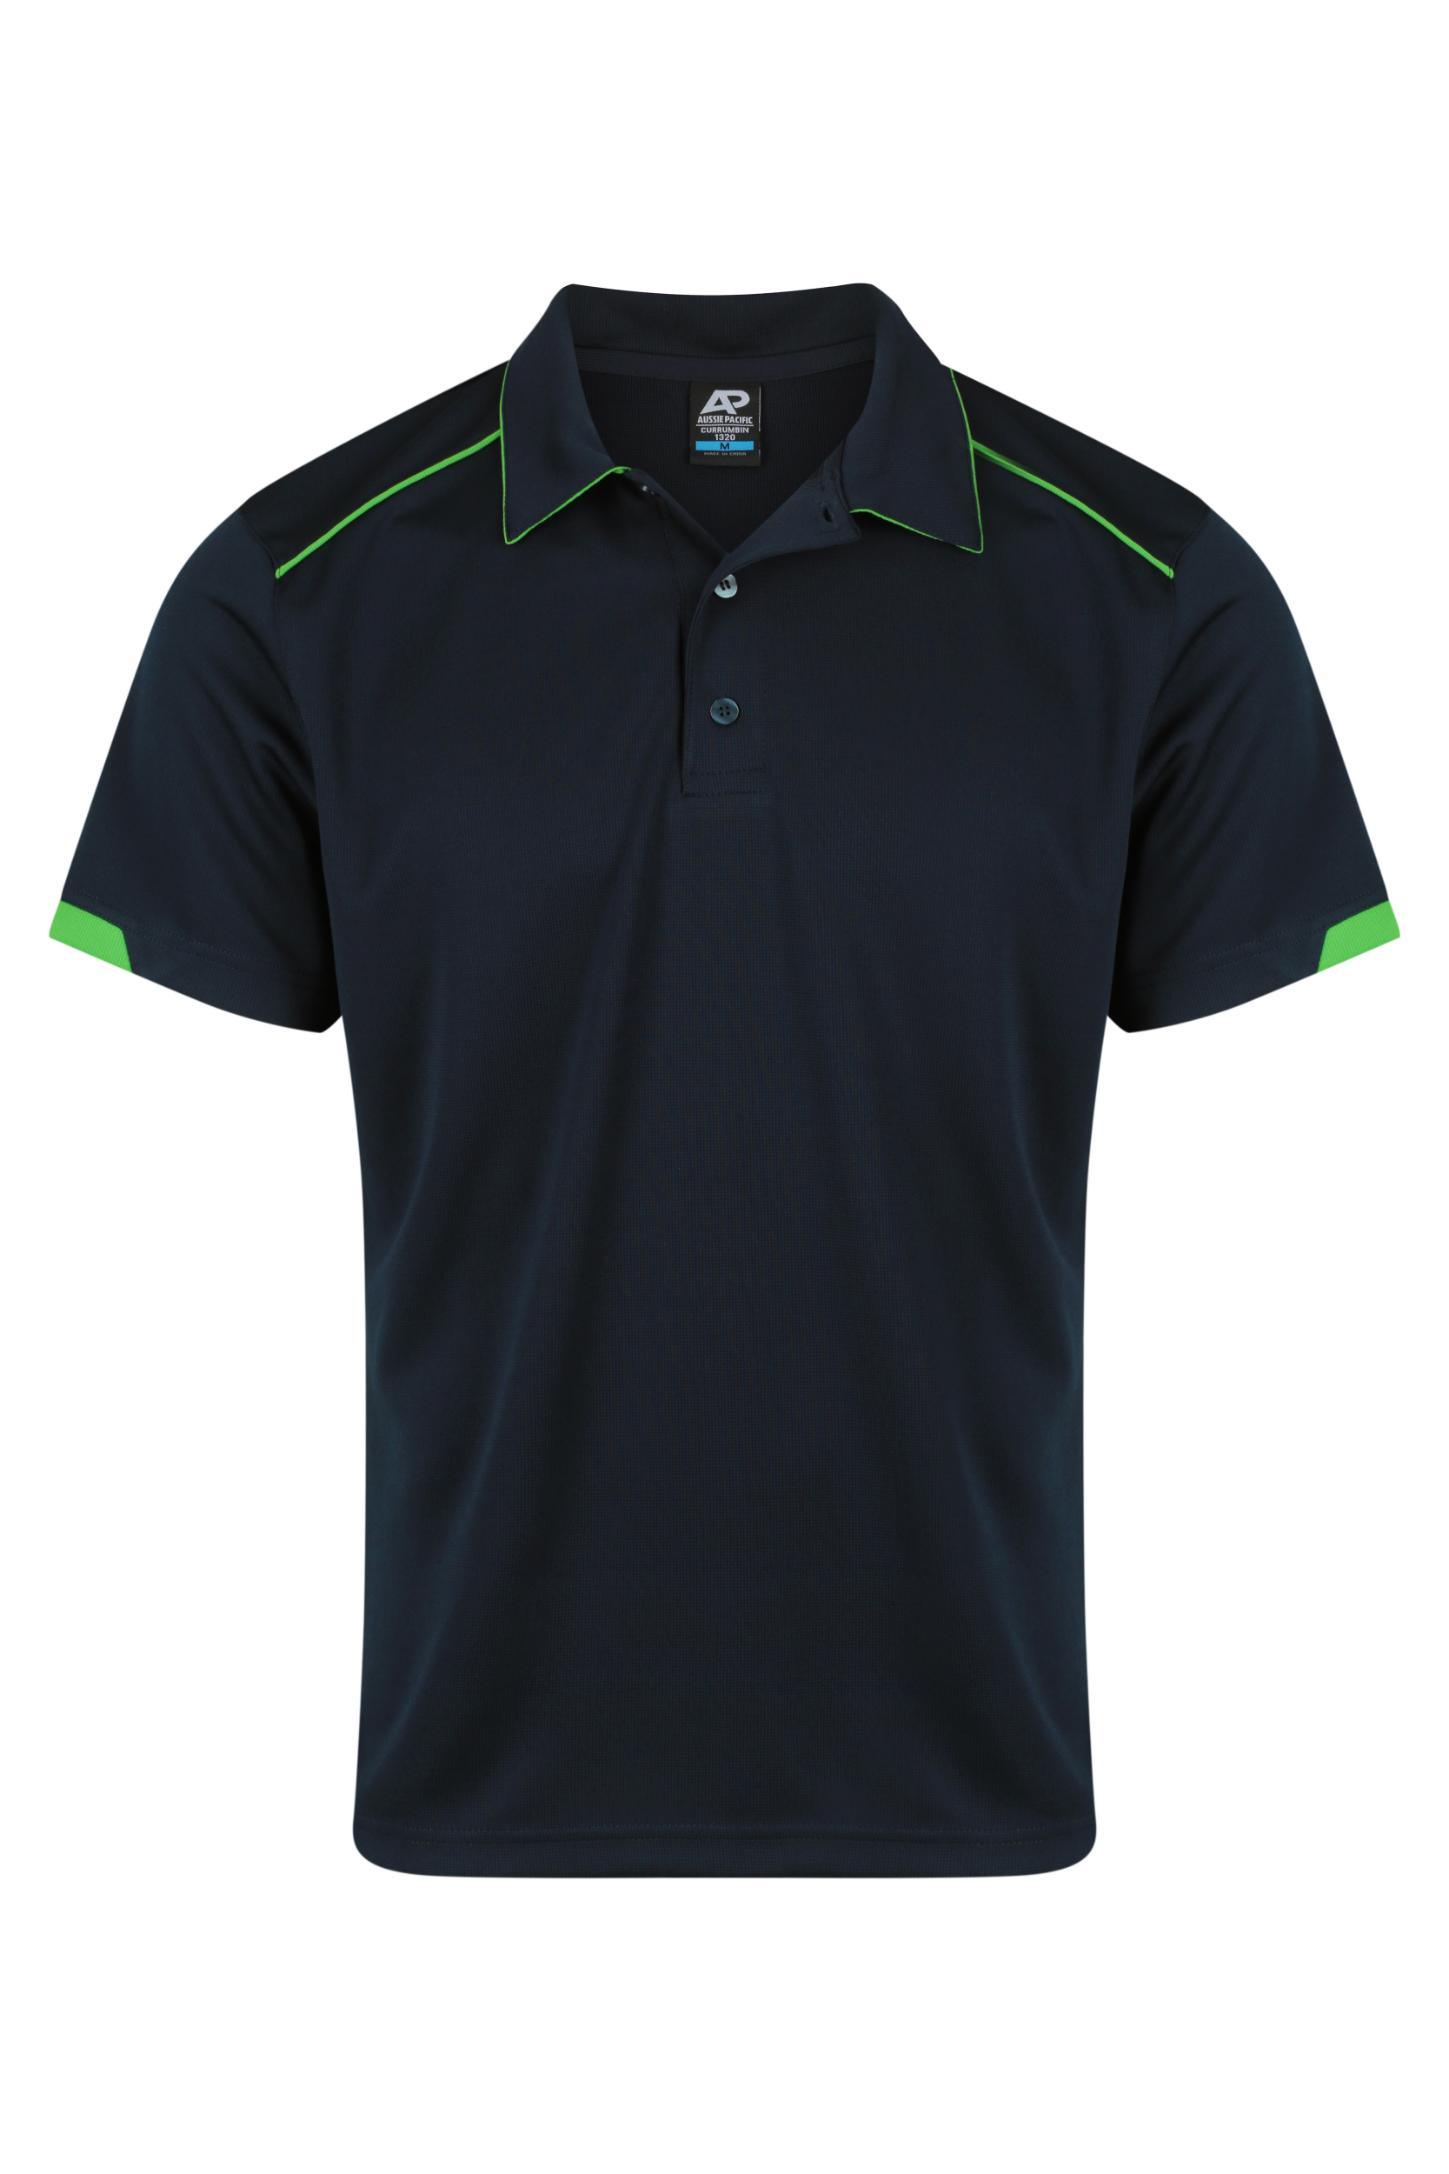 Currumbin Workwear Polo Shirts - Navy/Kawa Green